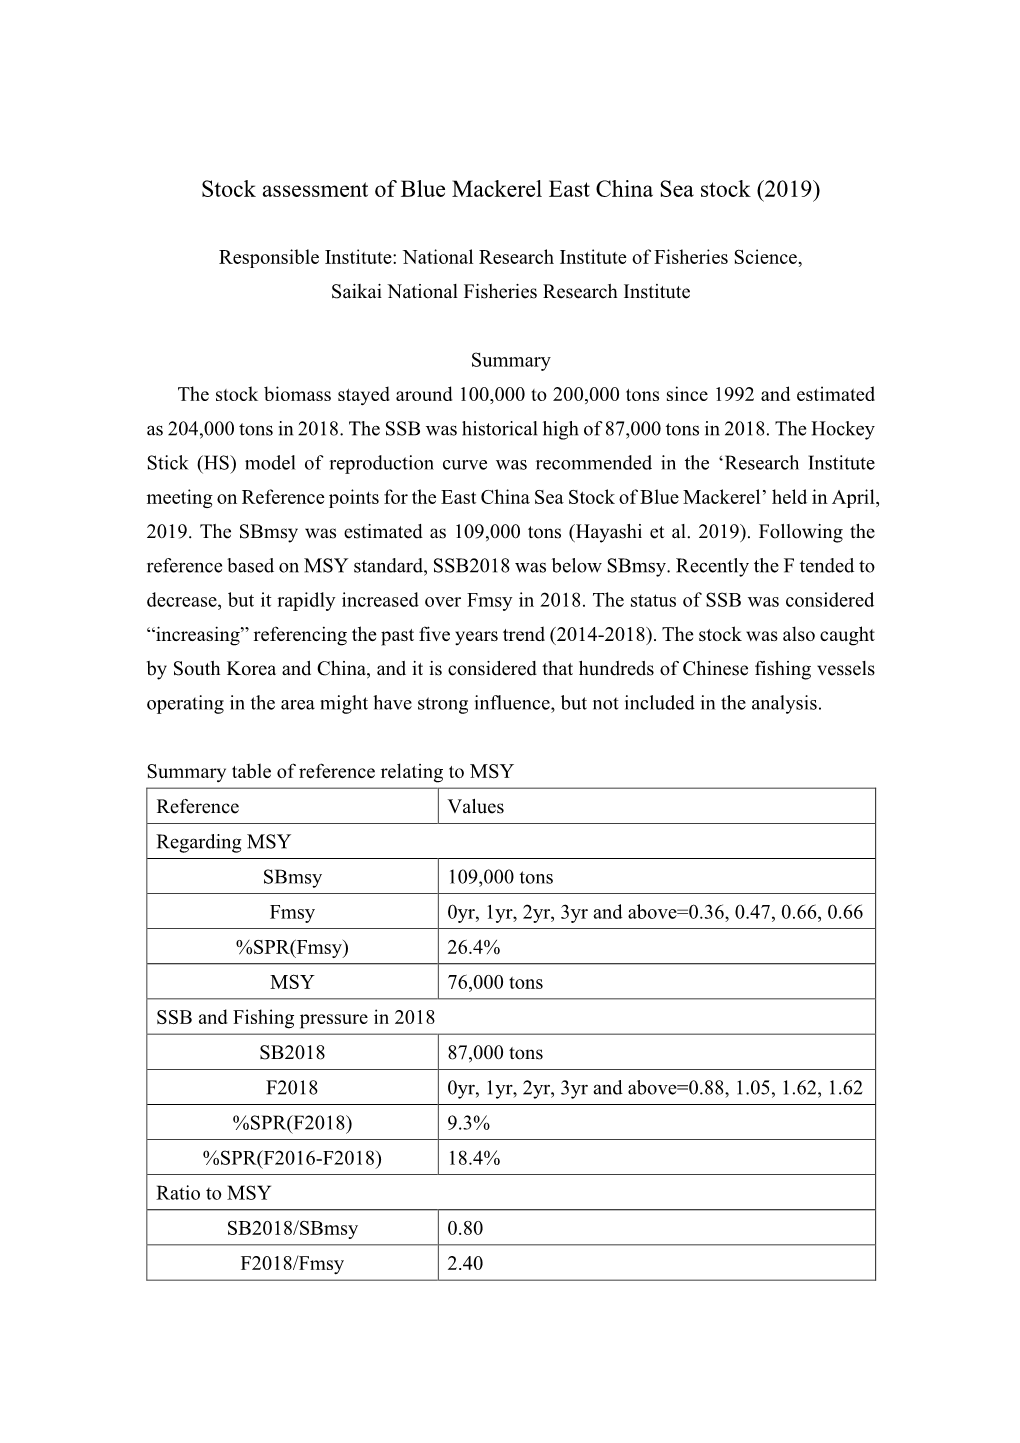 Stock Assessment of Blue Mackerel East China Sea Stock (2019)